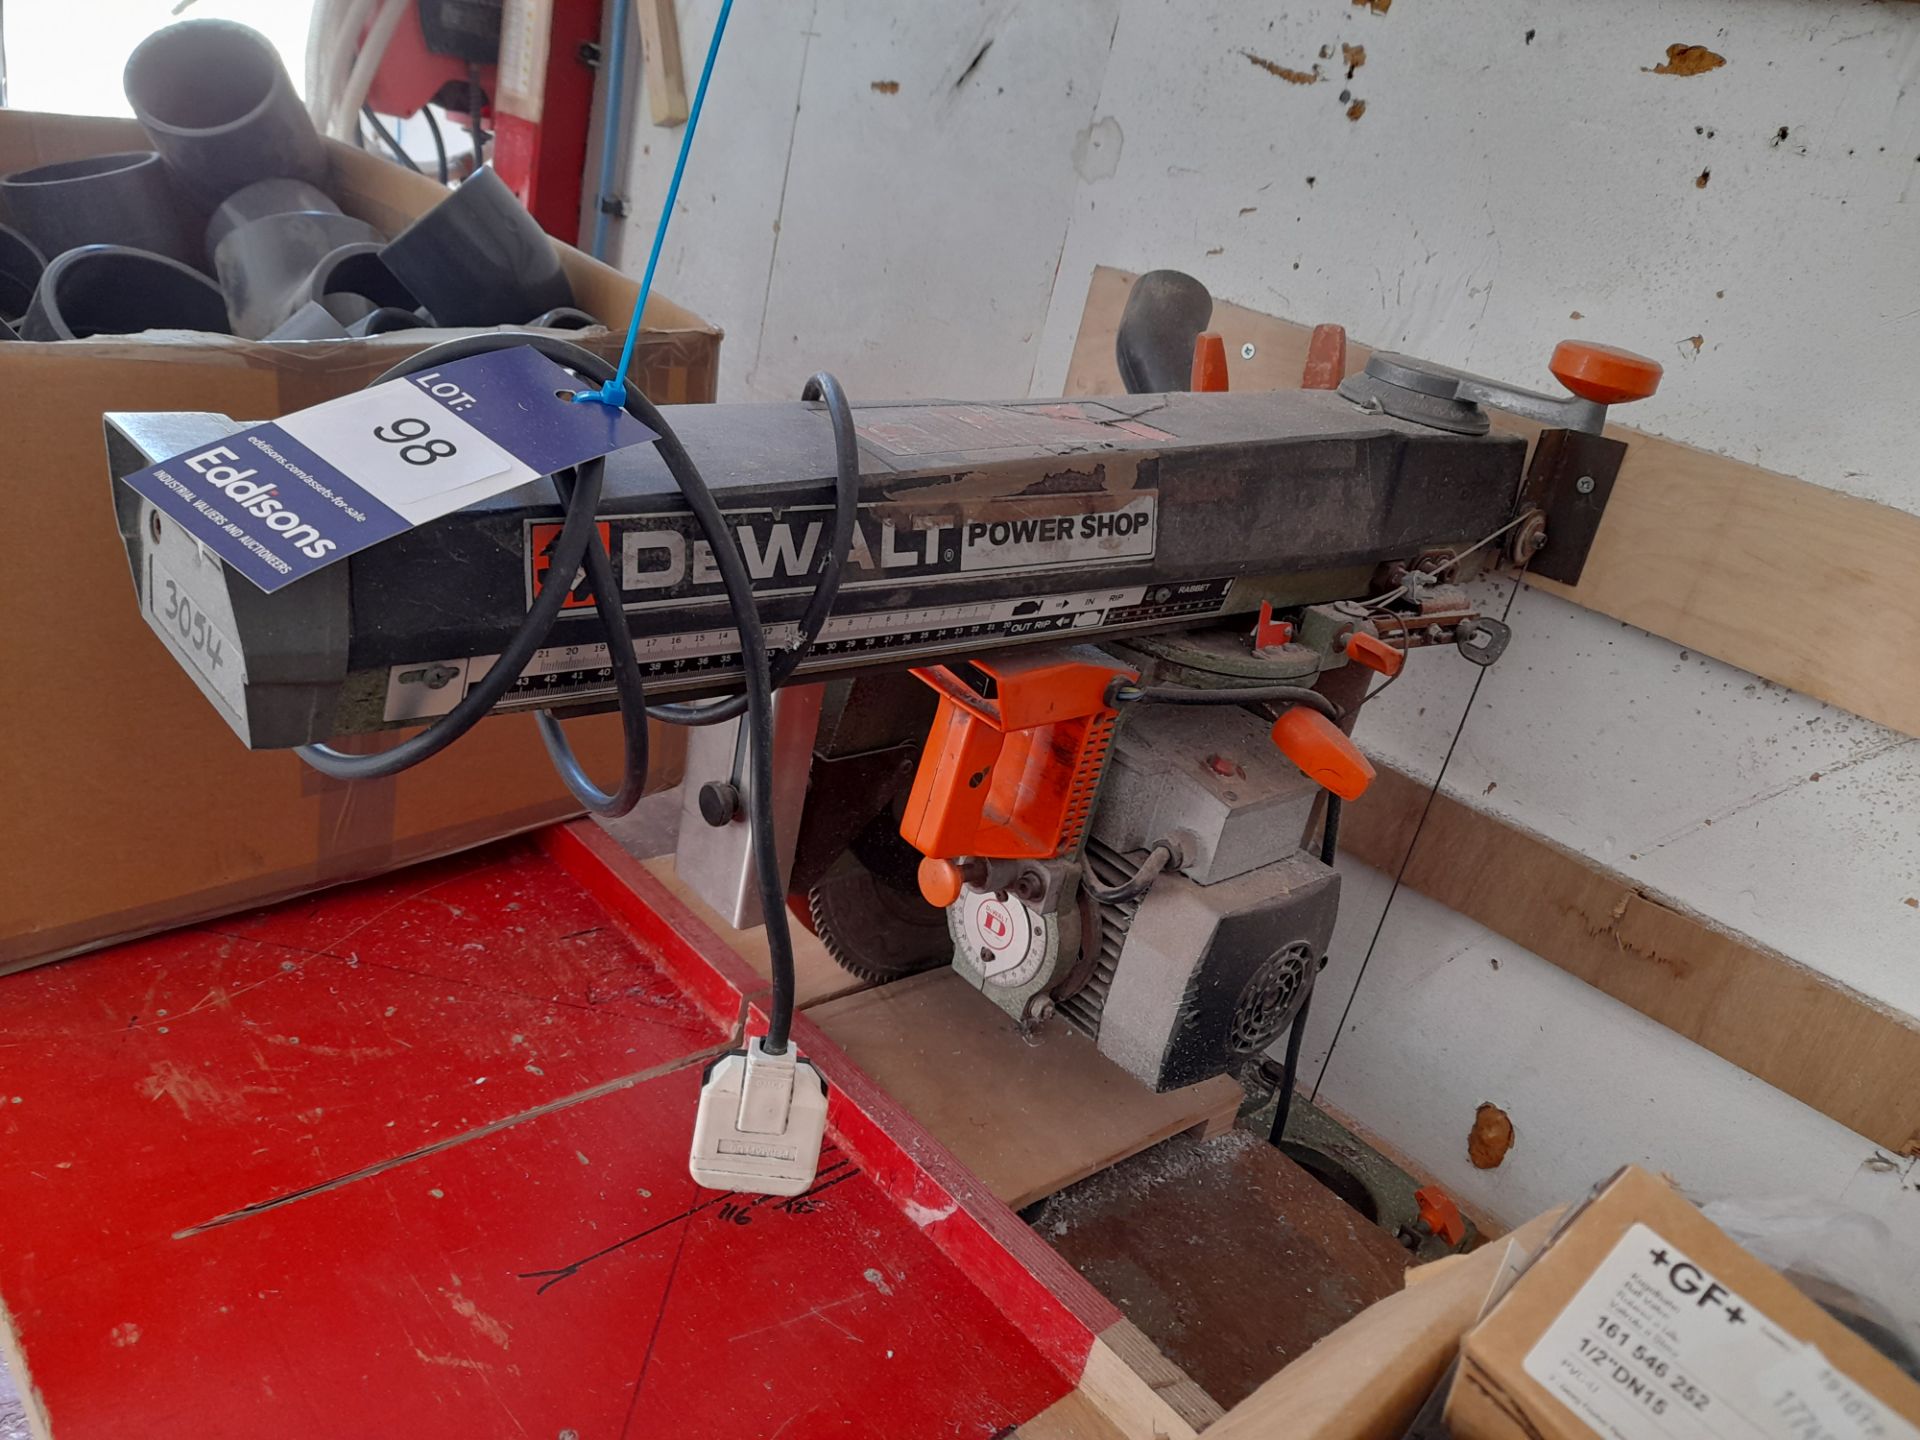 Dewalt Powershop pull across saw, 240V - Image 2 of 4